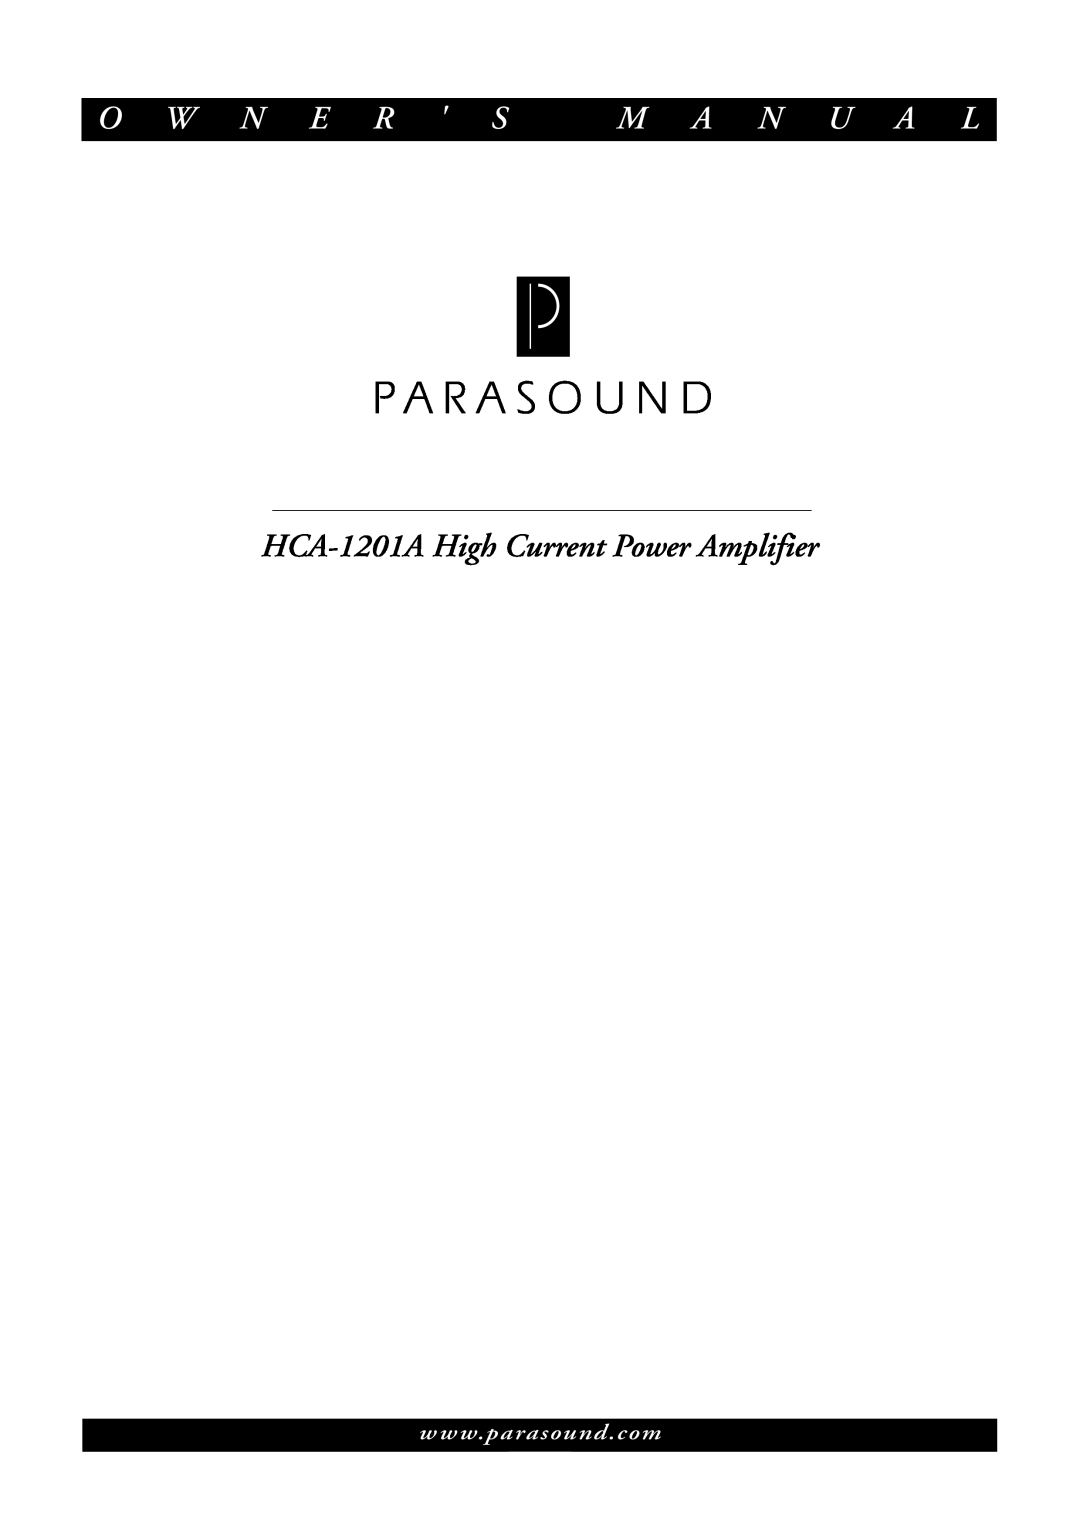 Parasound owner manual O W N E R S, M A N U A L, HCA-1201AHigh Current Power Amplifier 